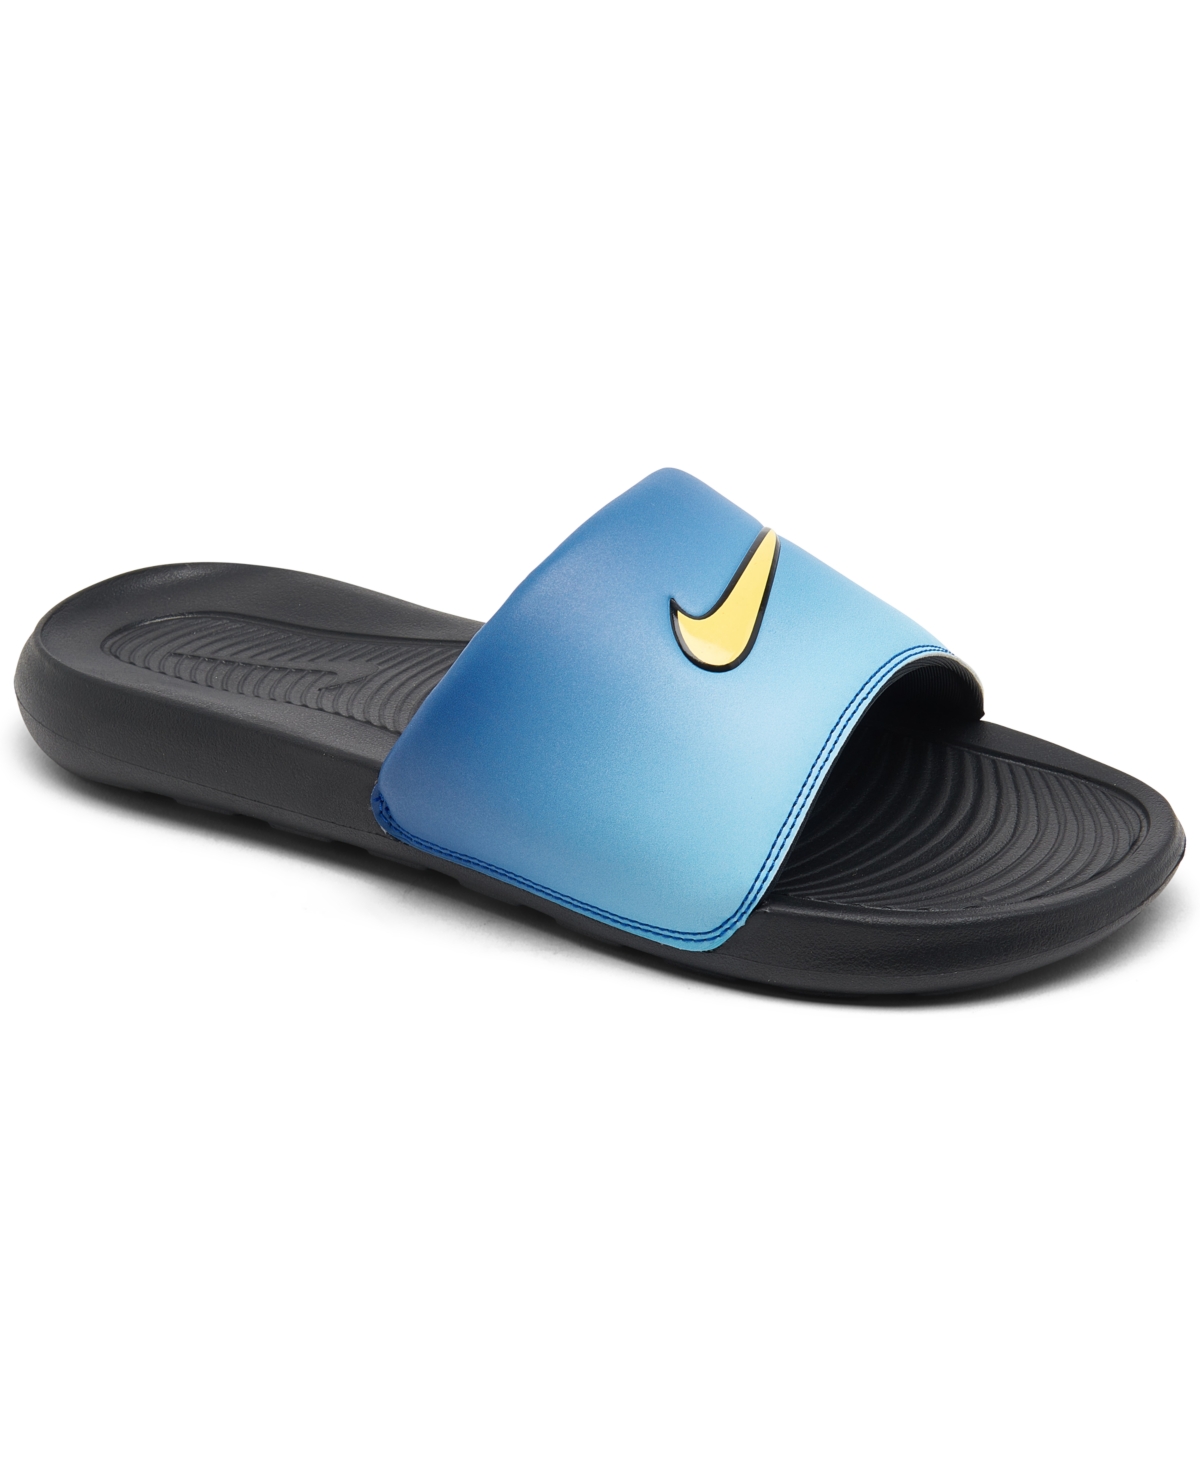 Men's Victori One Fade Print Slide Sandals from Finish Line - Hyper Blue/Chamois